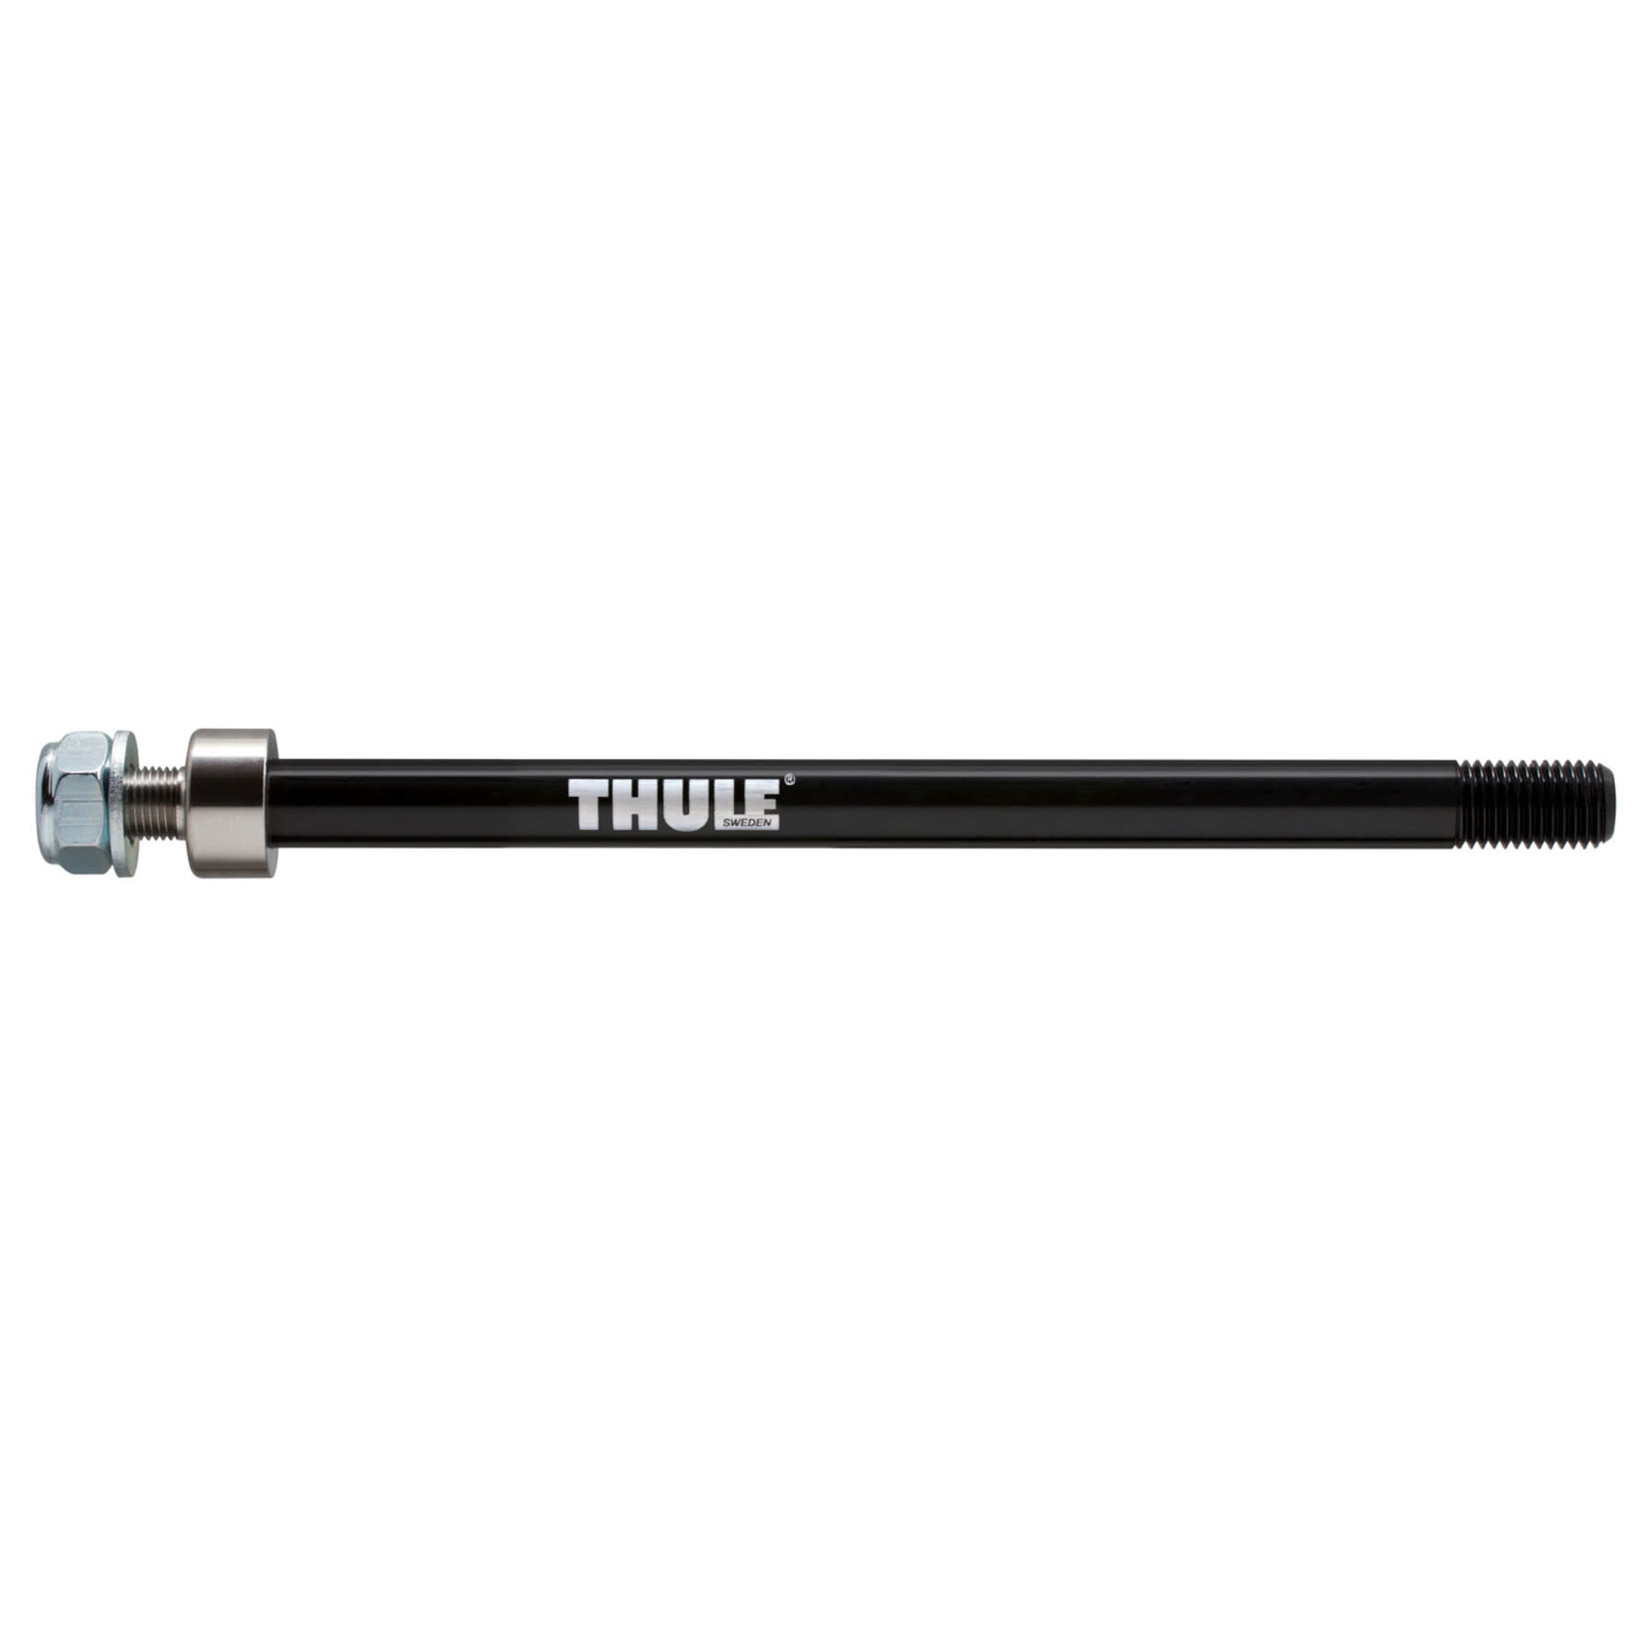 Thule Thule Thru Axle Shimano (M12 x 1.5) Adapter 209mm 20110735 - Black